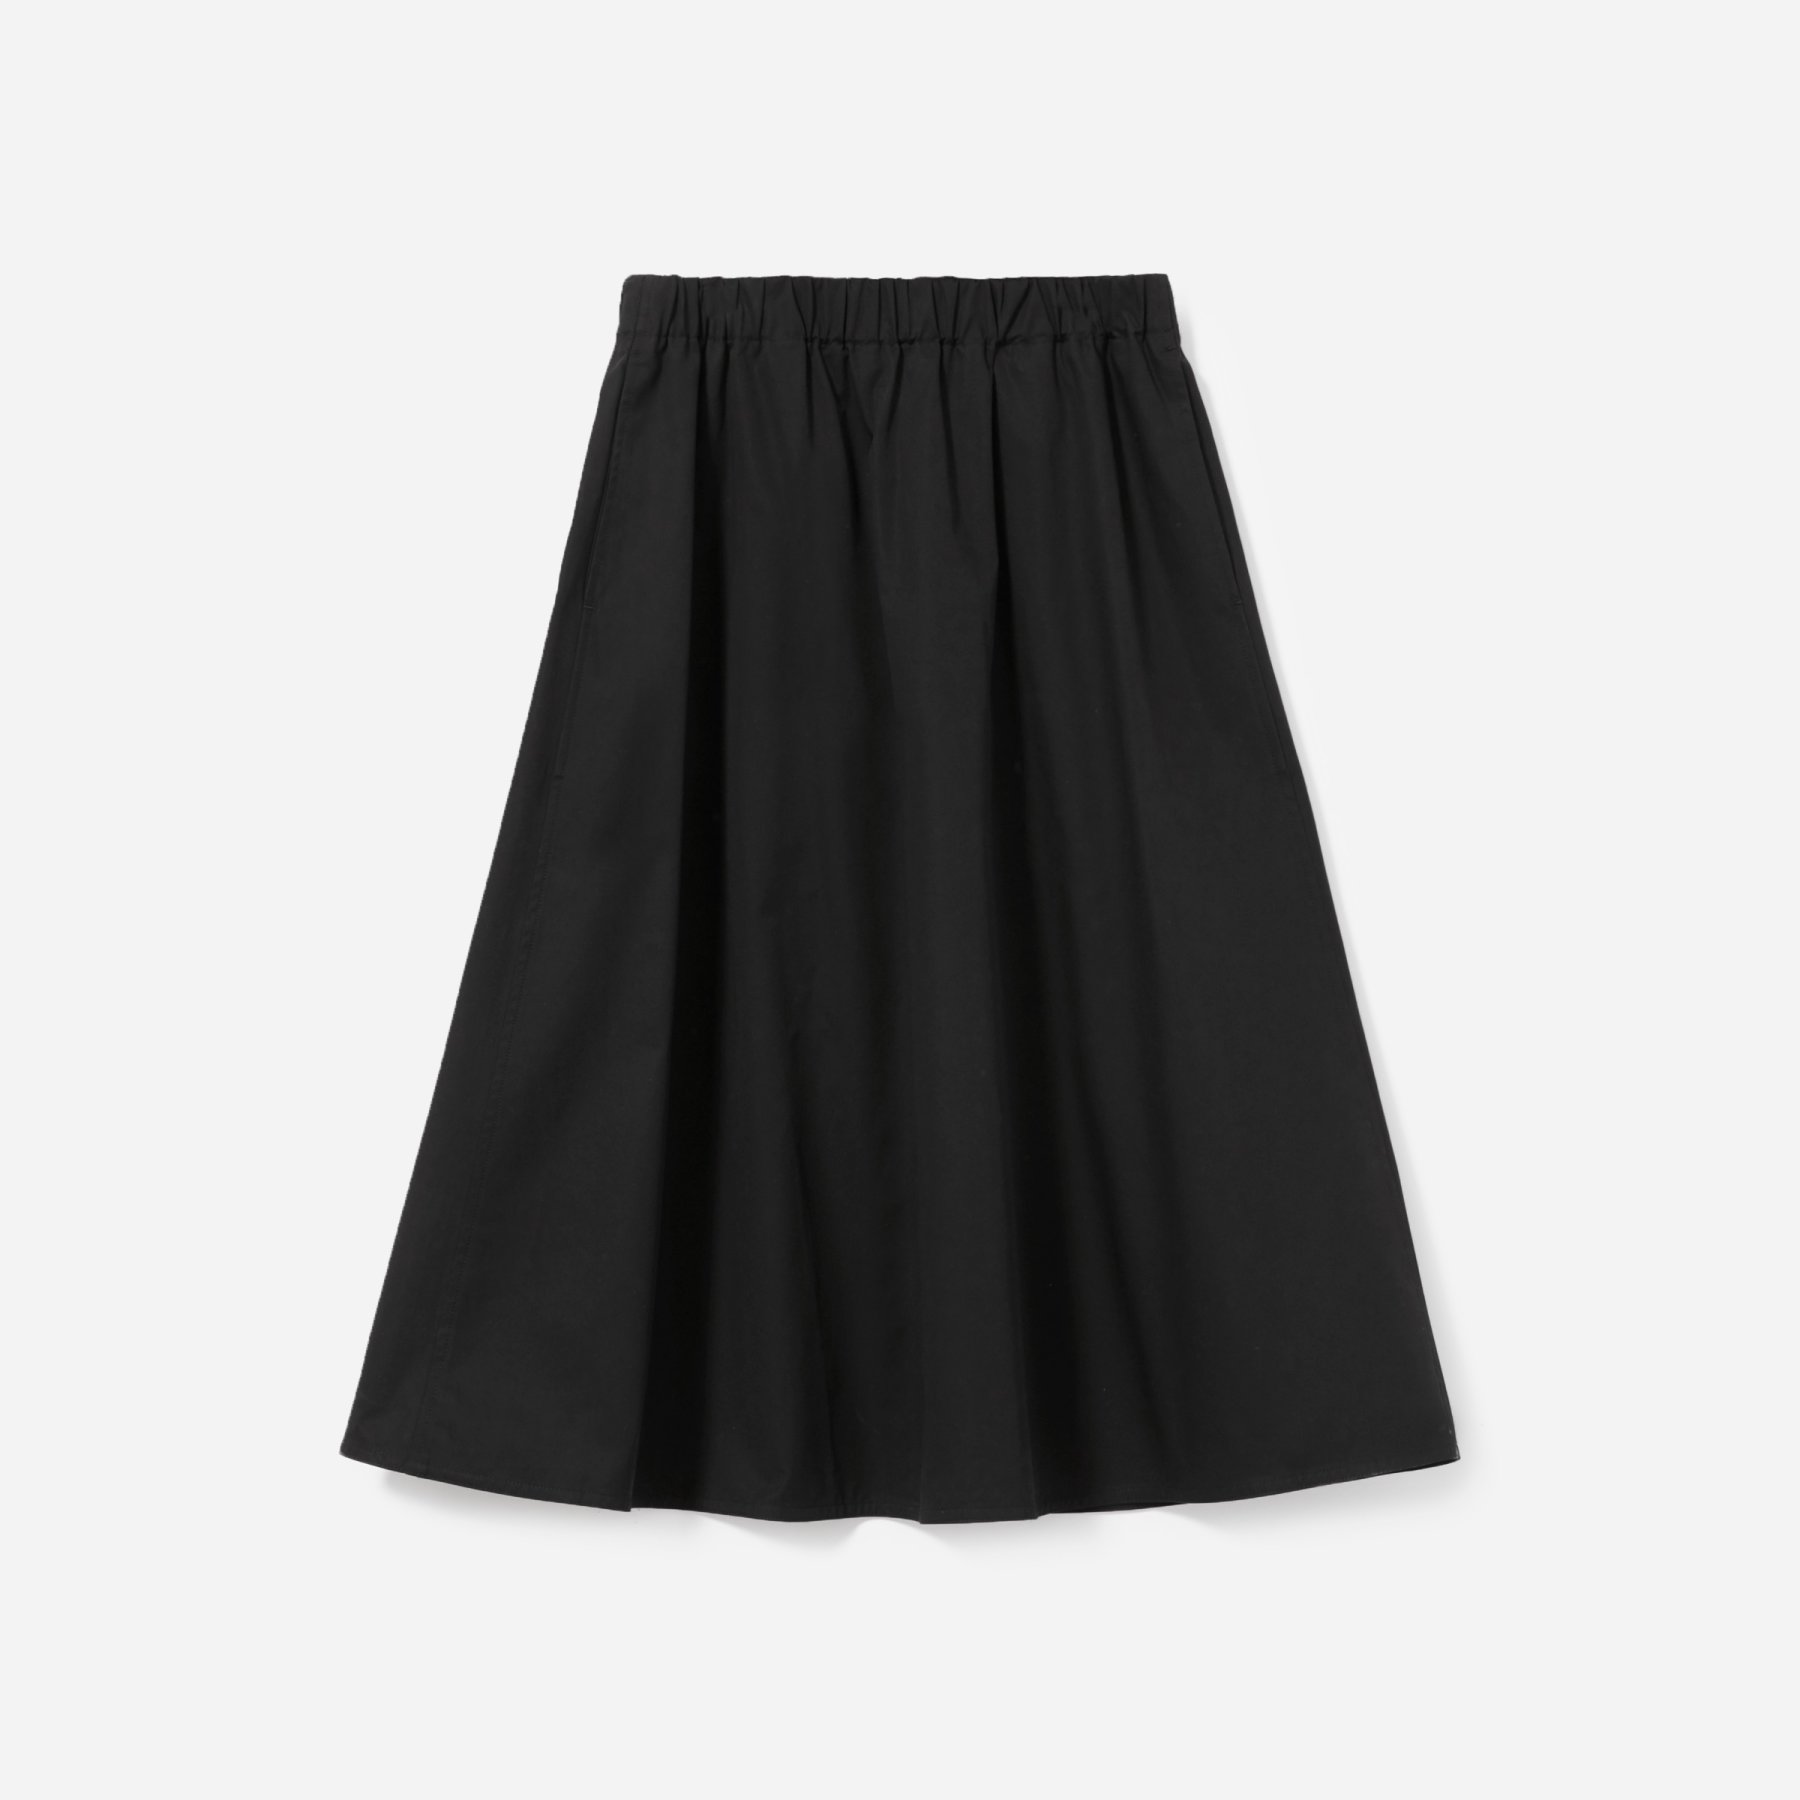 Everlane clean cotton A-line skirt